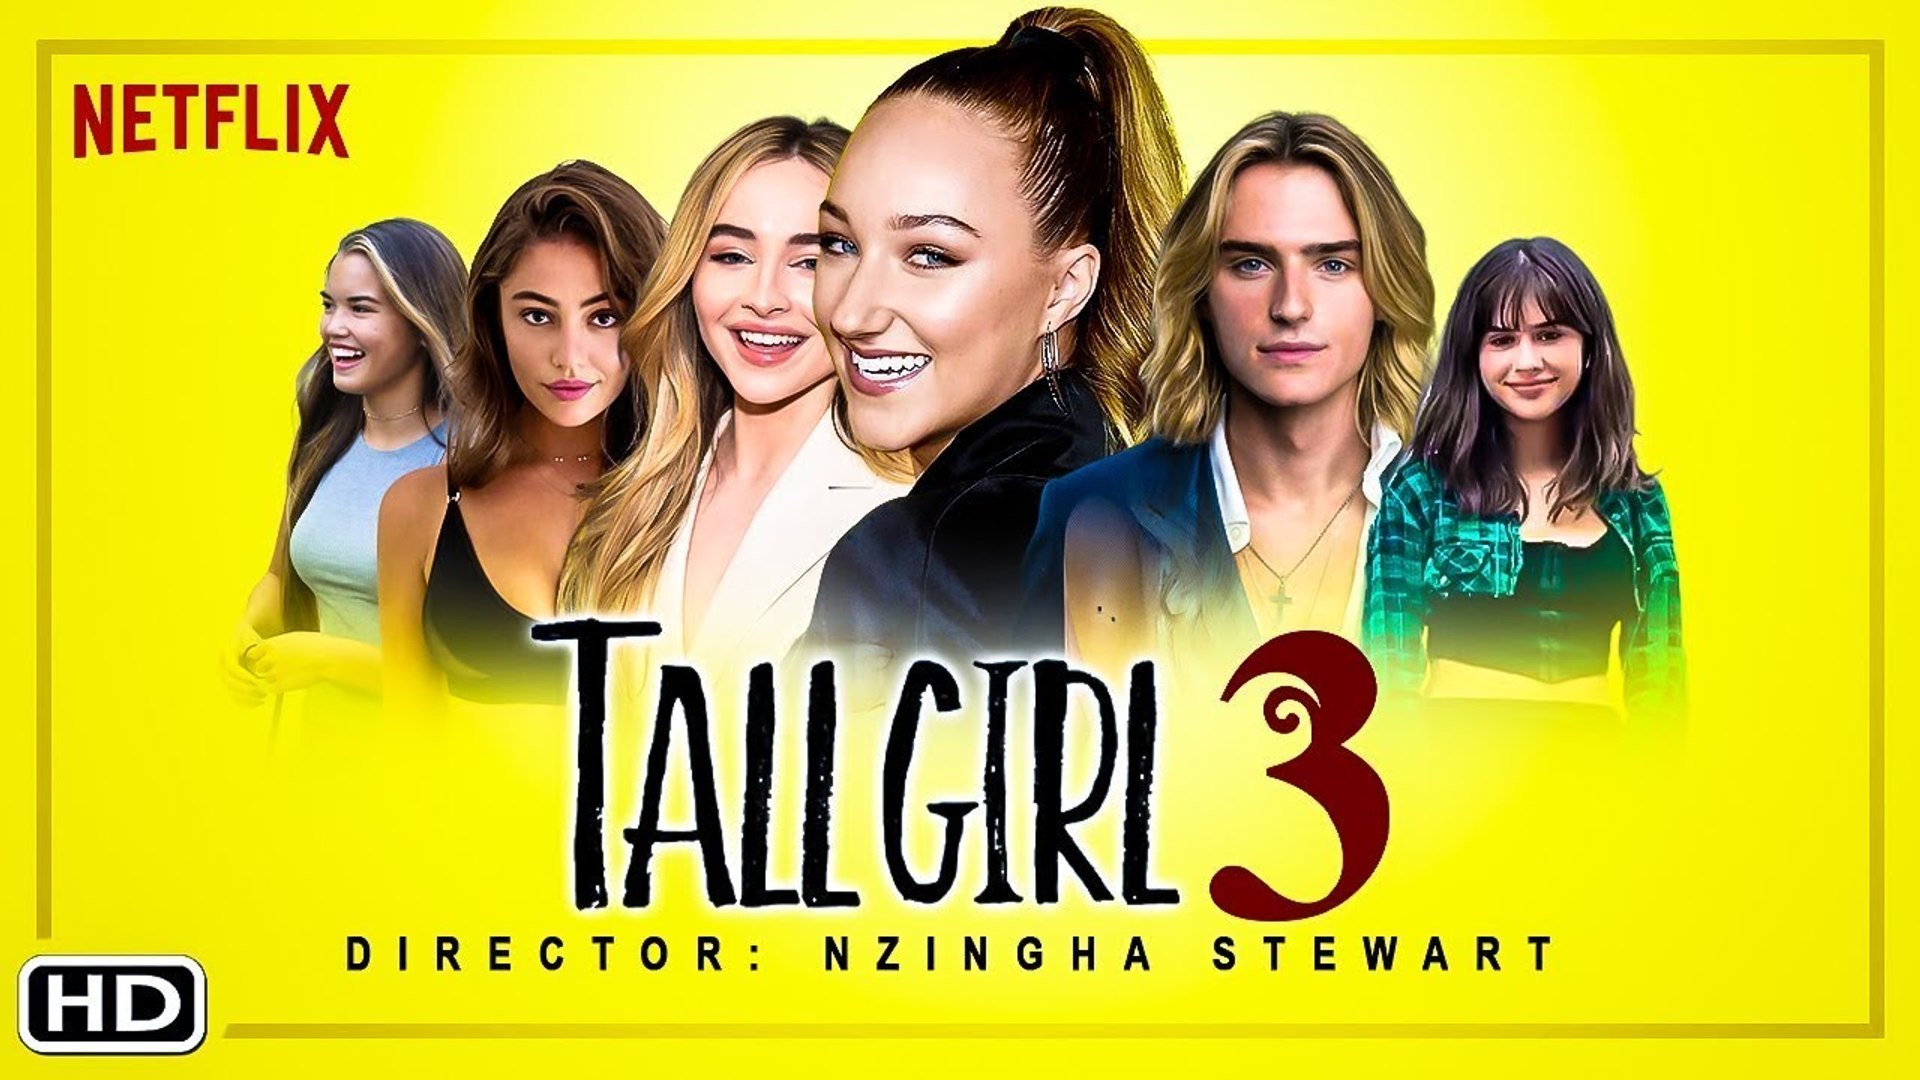 Tall Girl 3 Trailer - Netflix, Ava Michelle - video Dailymotion